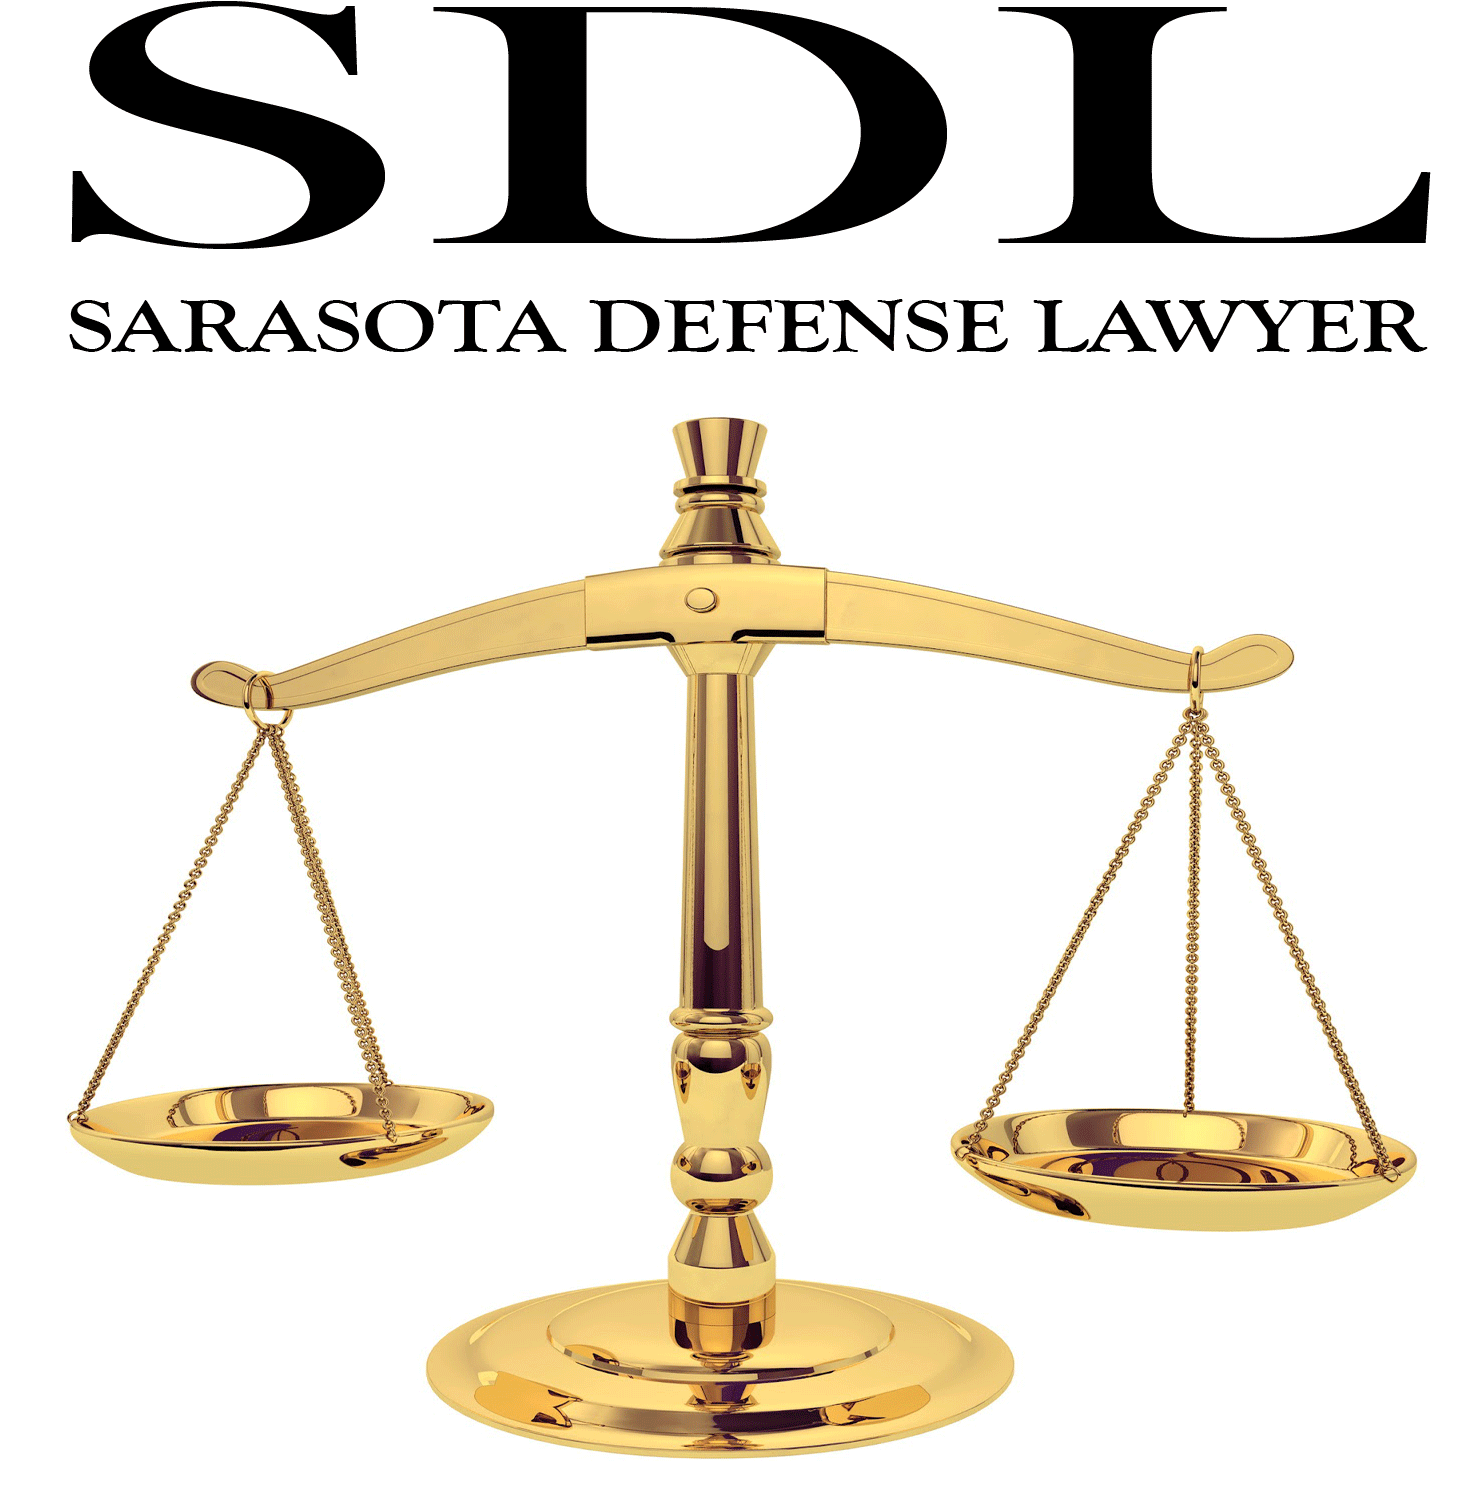 Criminal Defense Lawyer Usa - Nigeria High Court Logo (1477x1600)